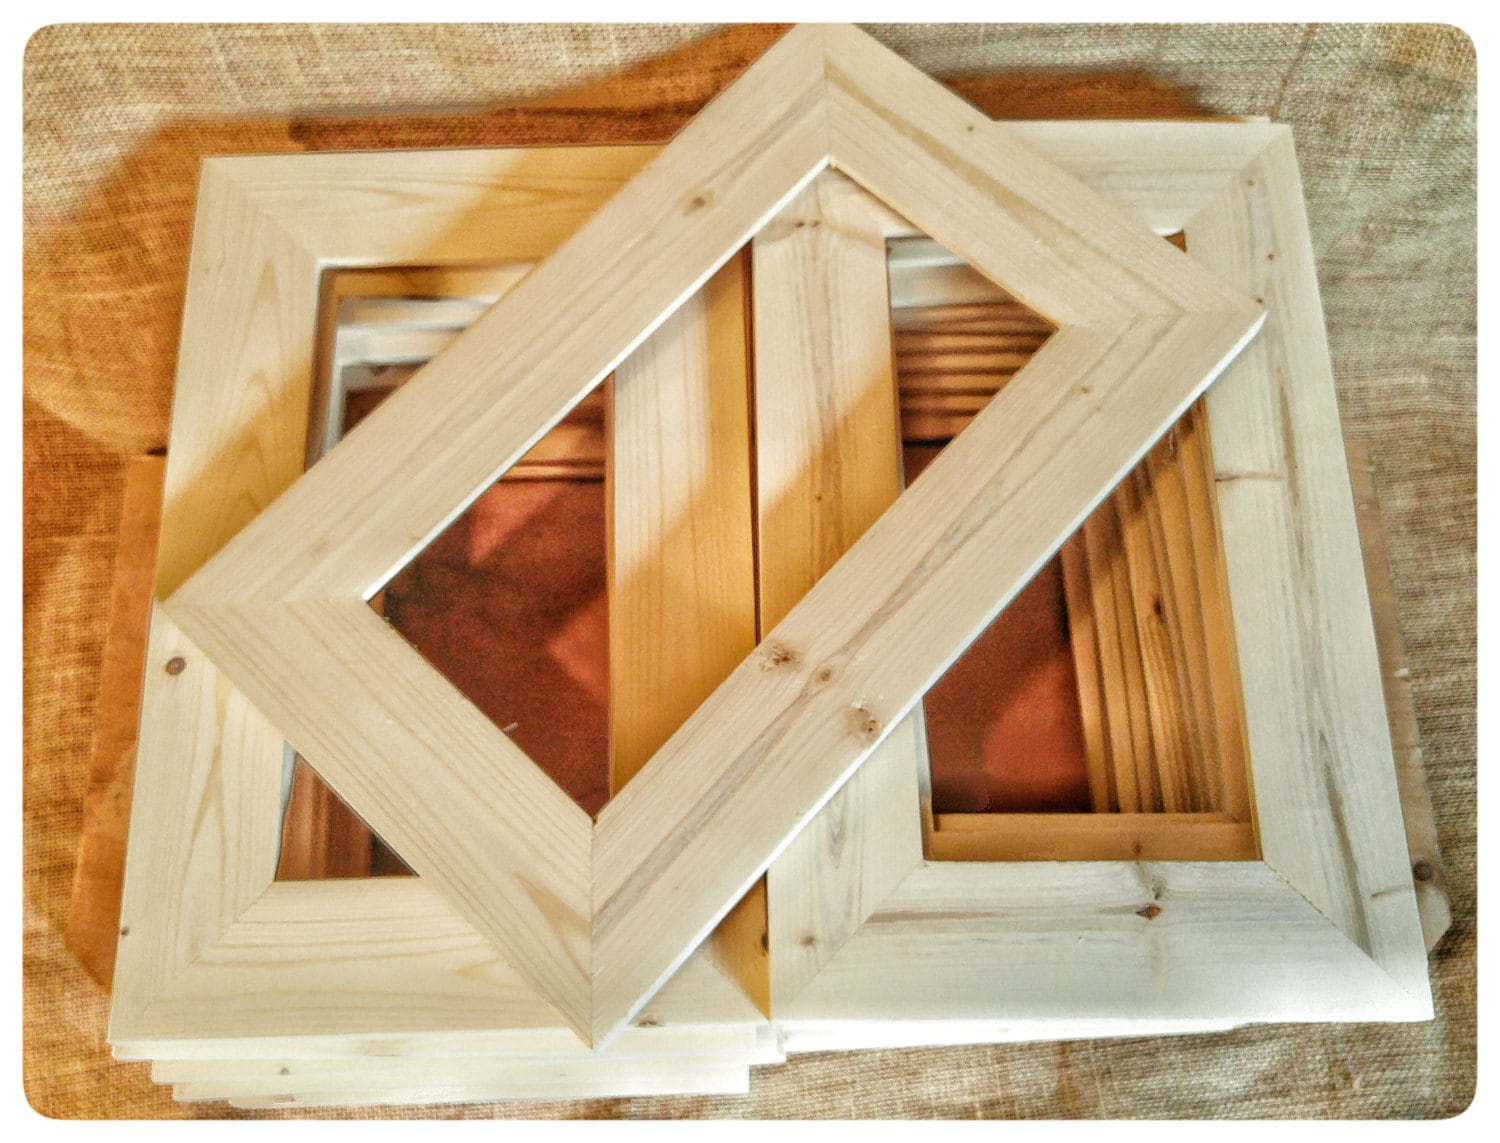 25 Wood Frames, No Hardware or Glass, Bulk Wood Frames, 5x10 Wood